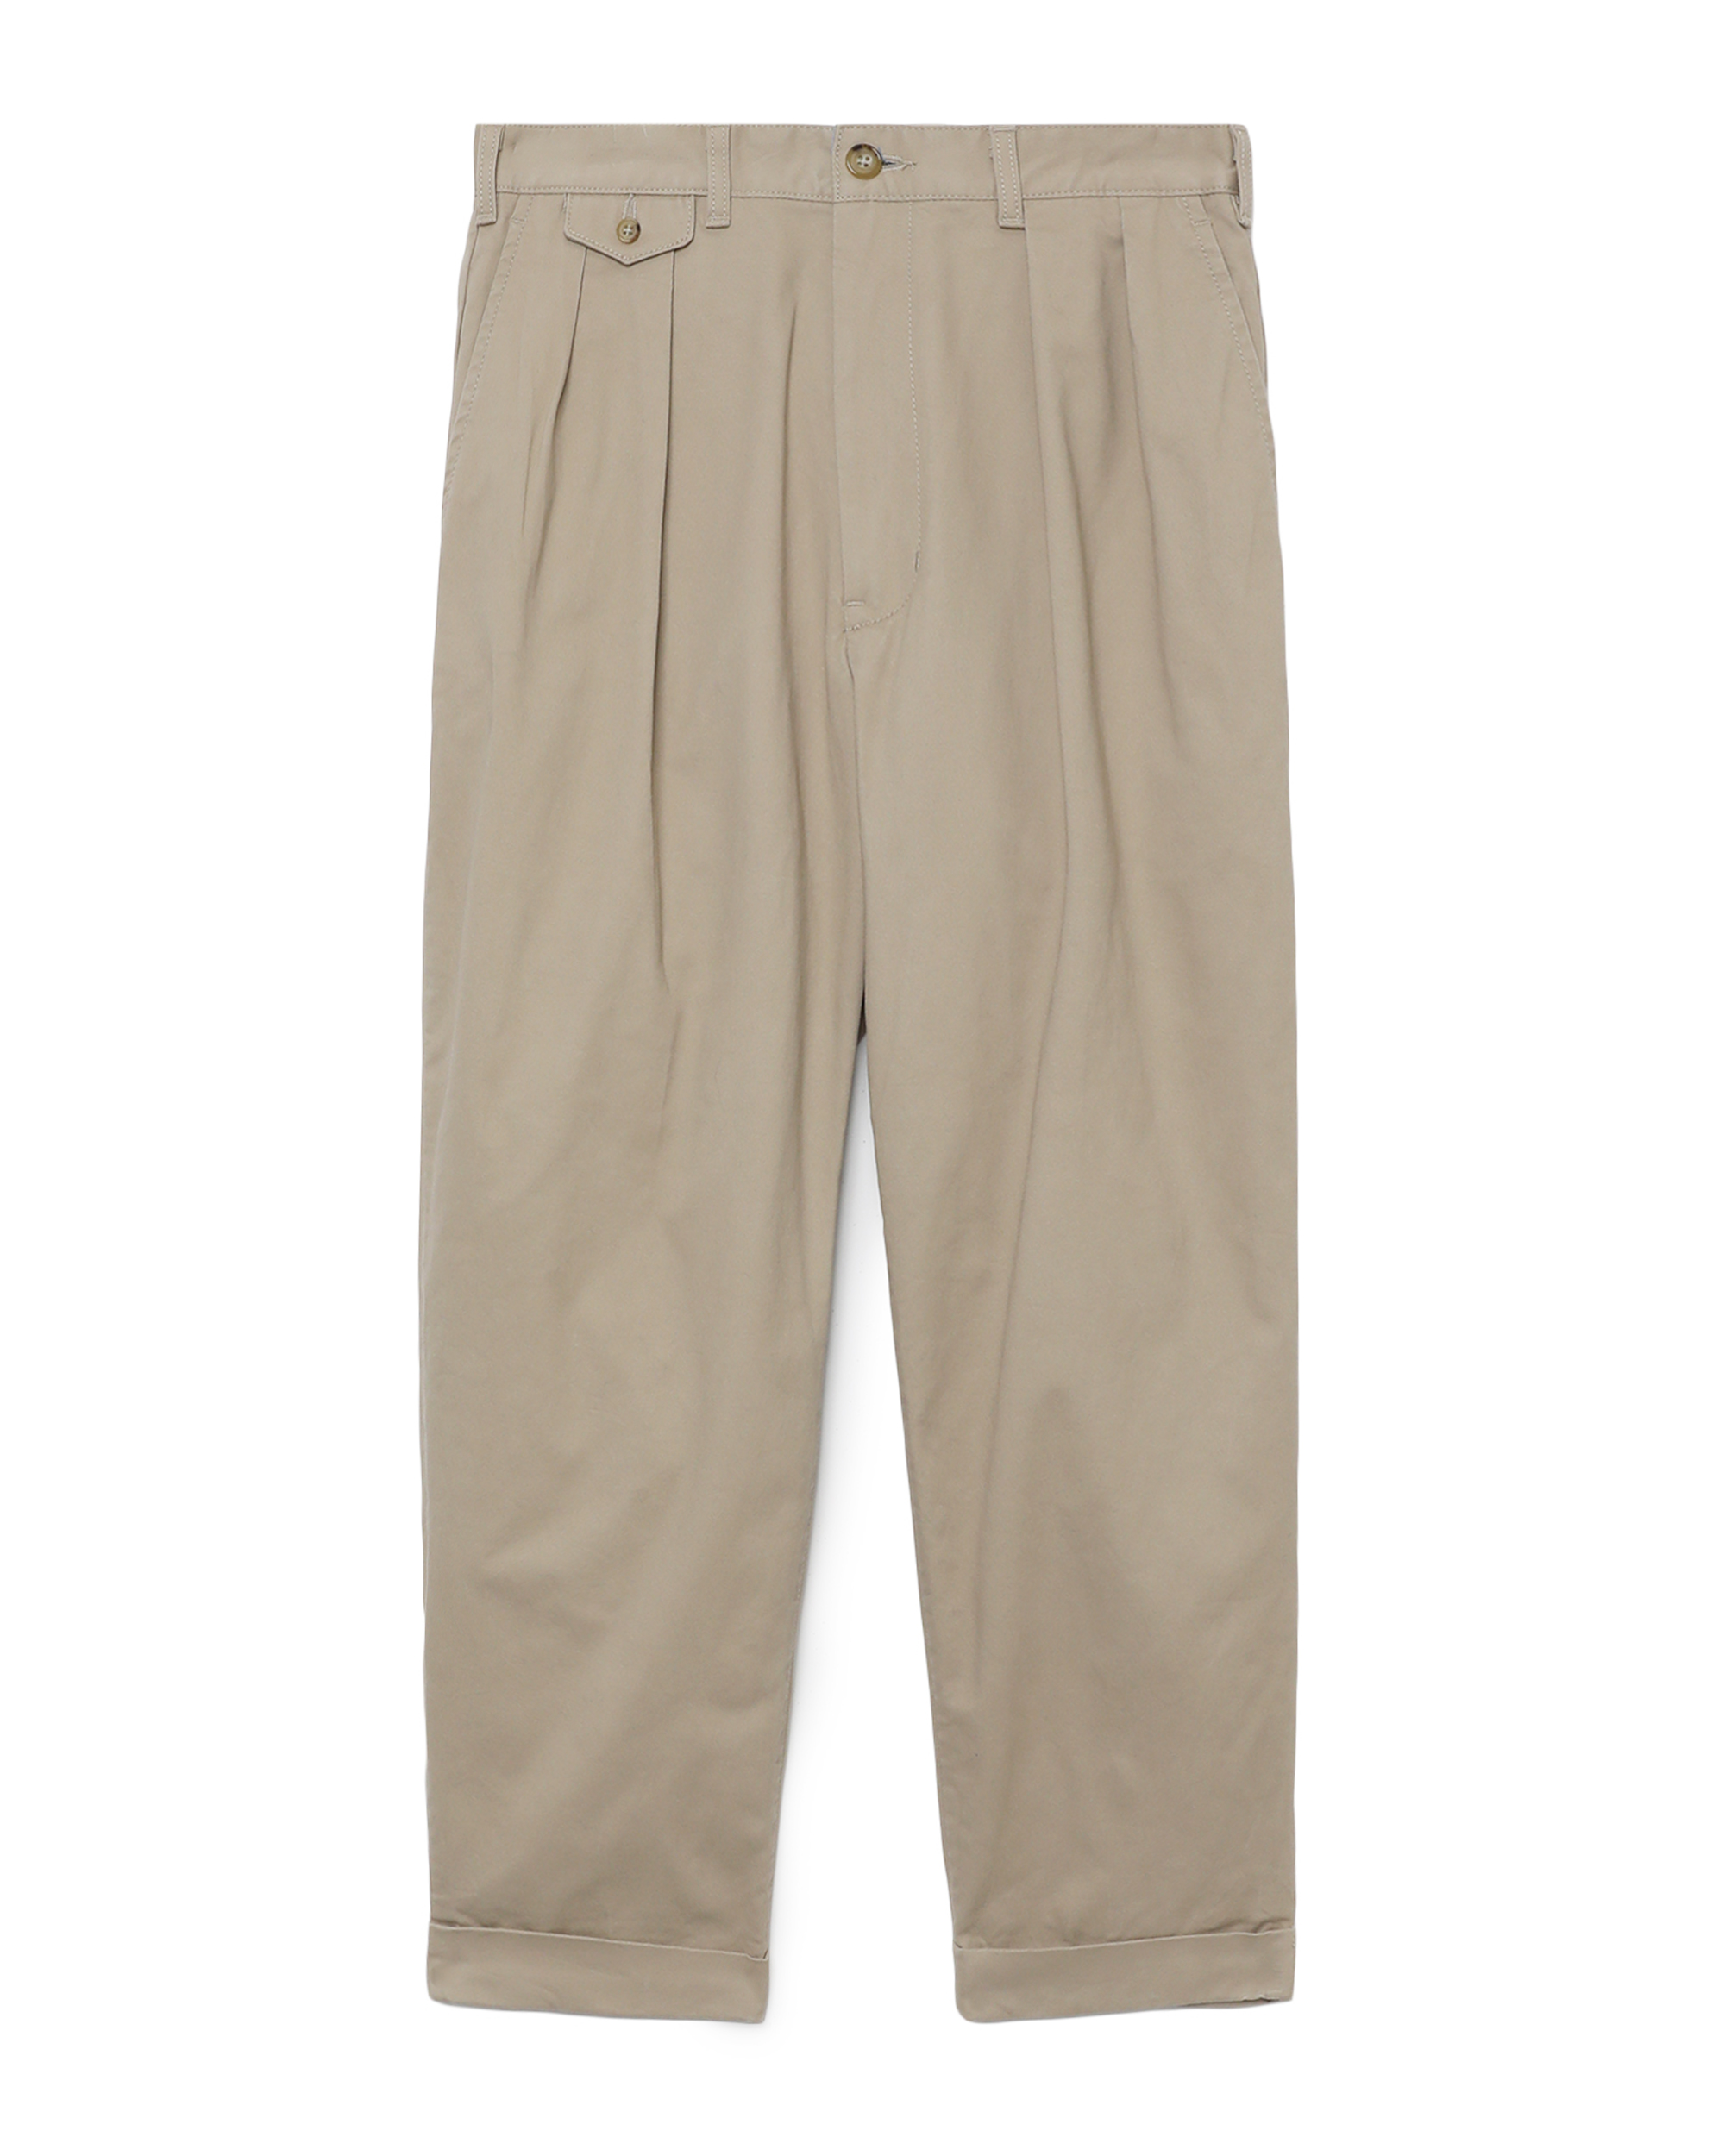 Beams Plus Japanese Brand Plaid Pattern Casual Trousers Pants Prorsum  Checked | eBay